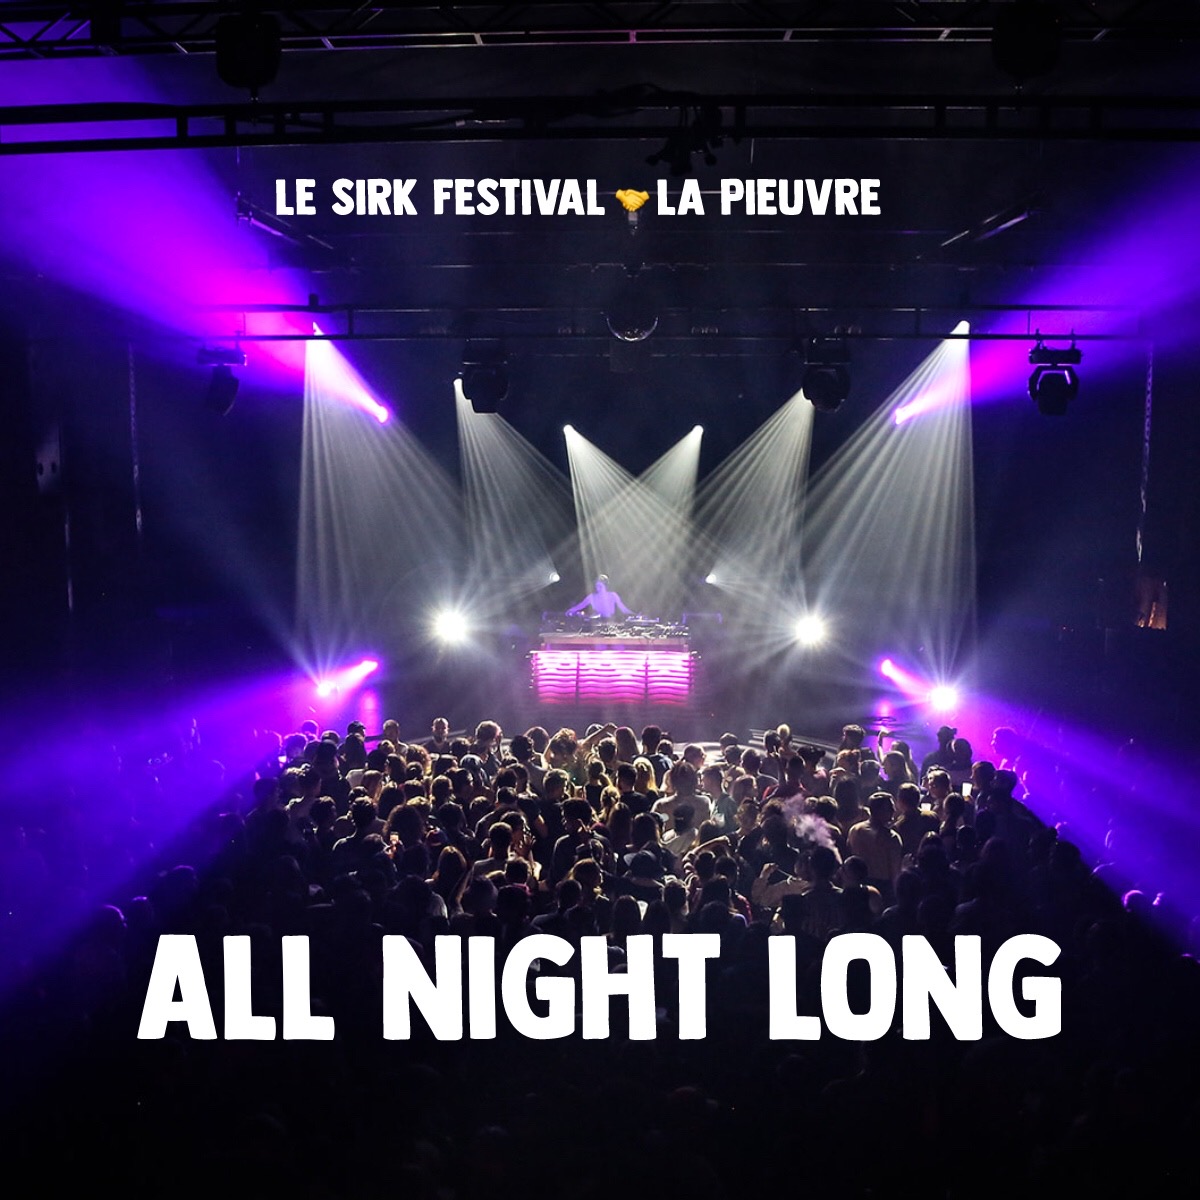 All Night Long, Le Sirk Festival x La Pieuvre